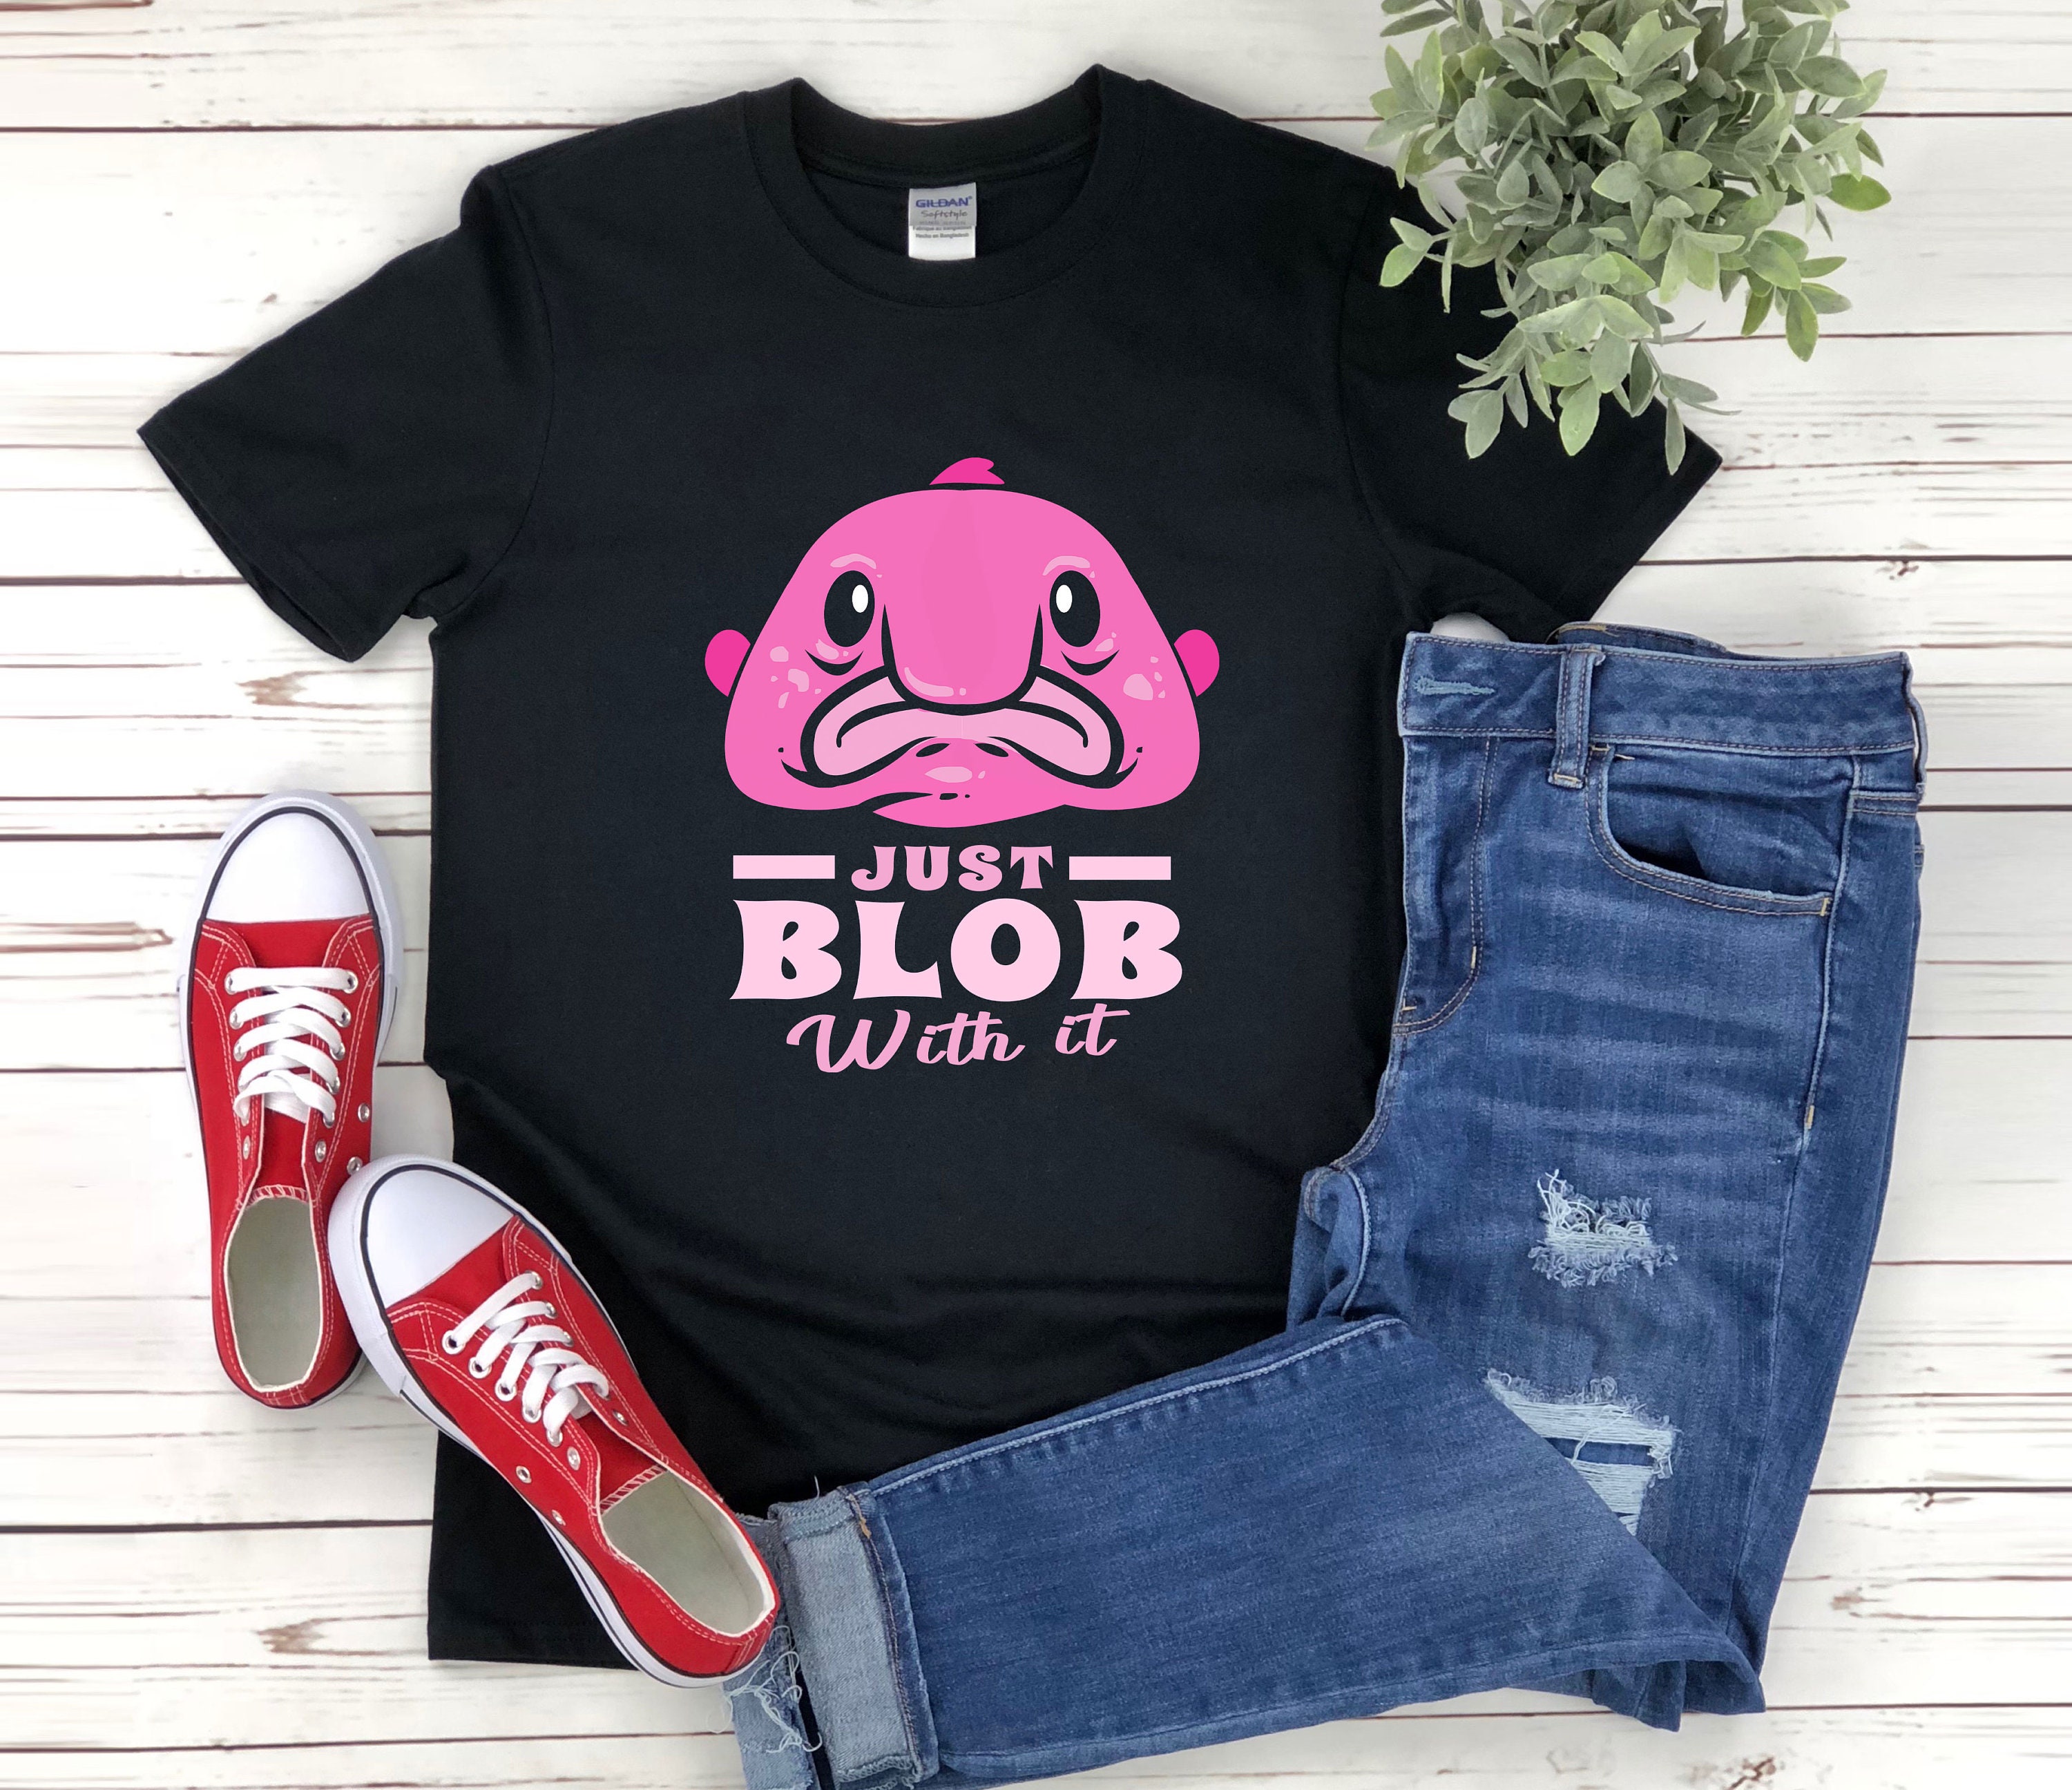 Pet Blobfish Meme Funny Blob Fish Blobfish Gifts T-shirt